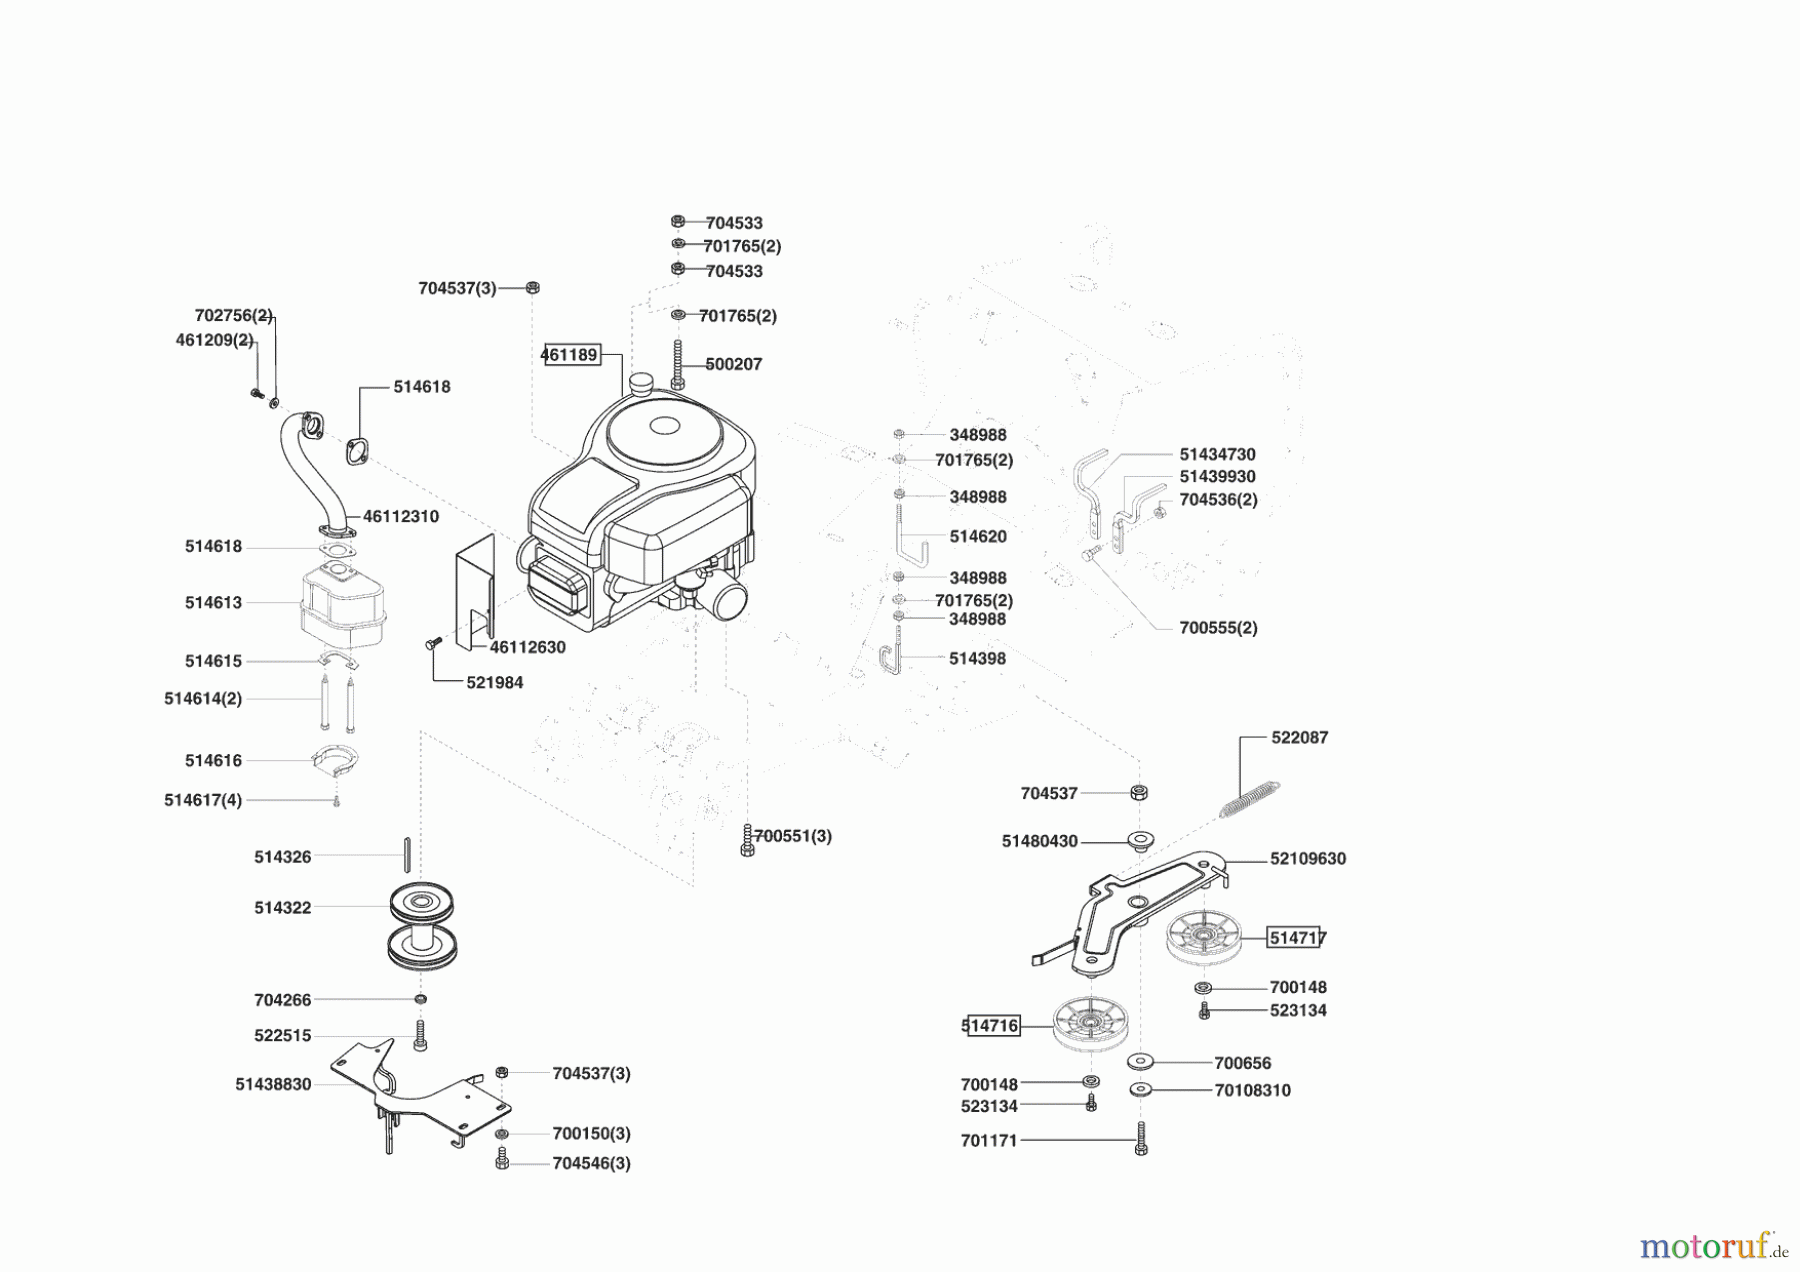  AL-KO Gartentechnik Rasentraktor T850 Seite 4